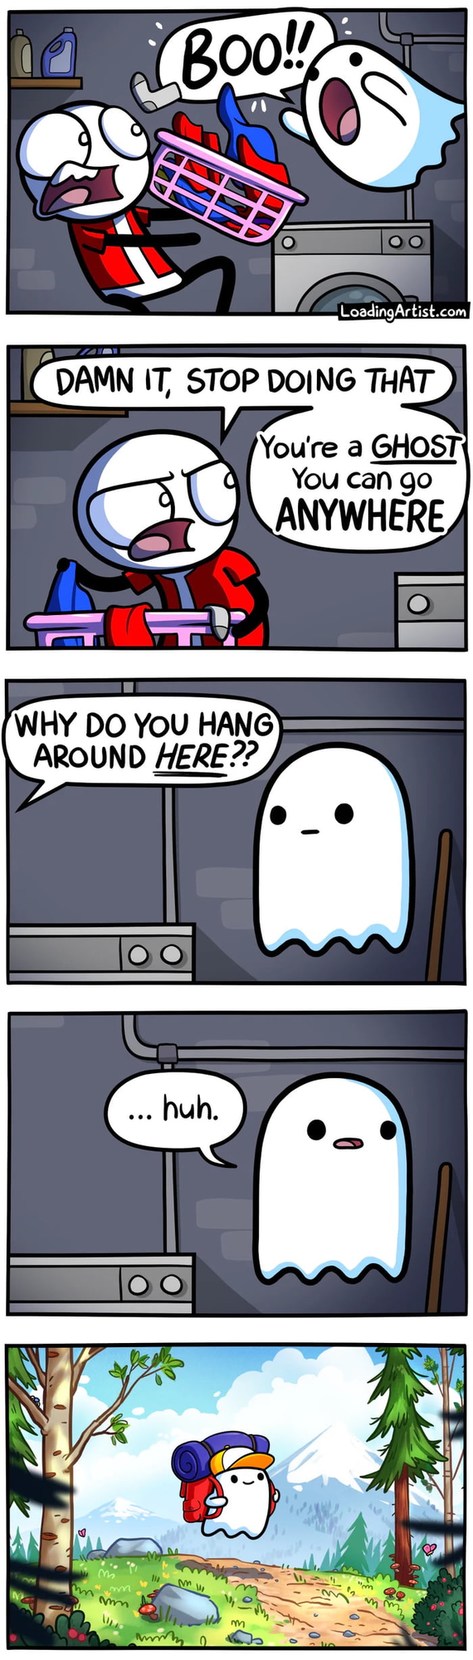 Ghost story - meme